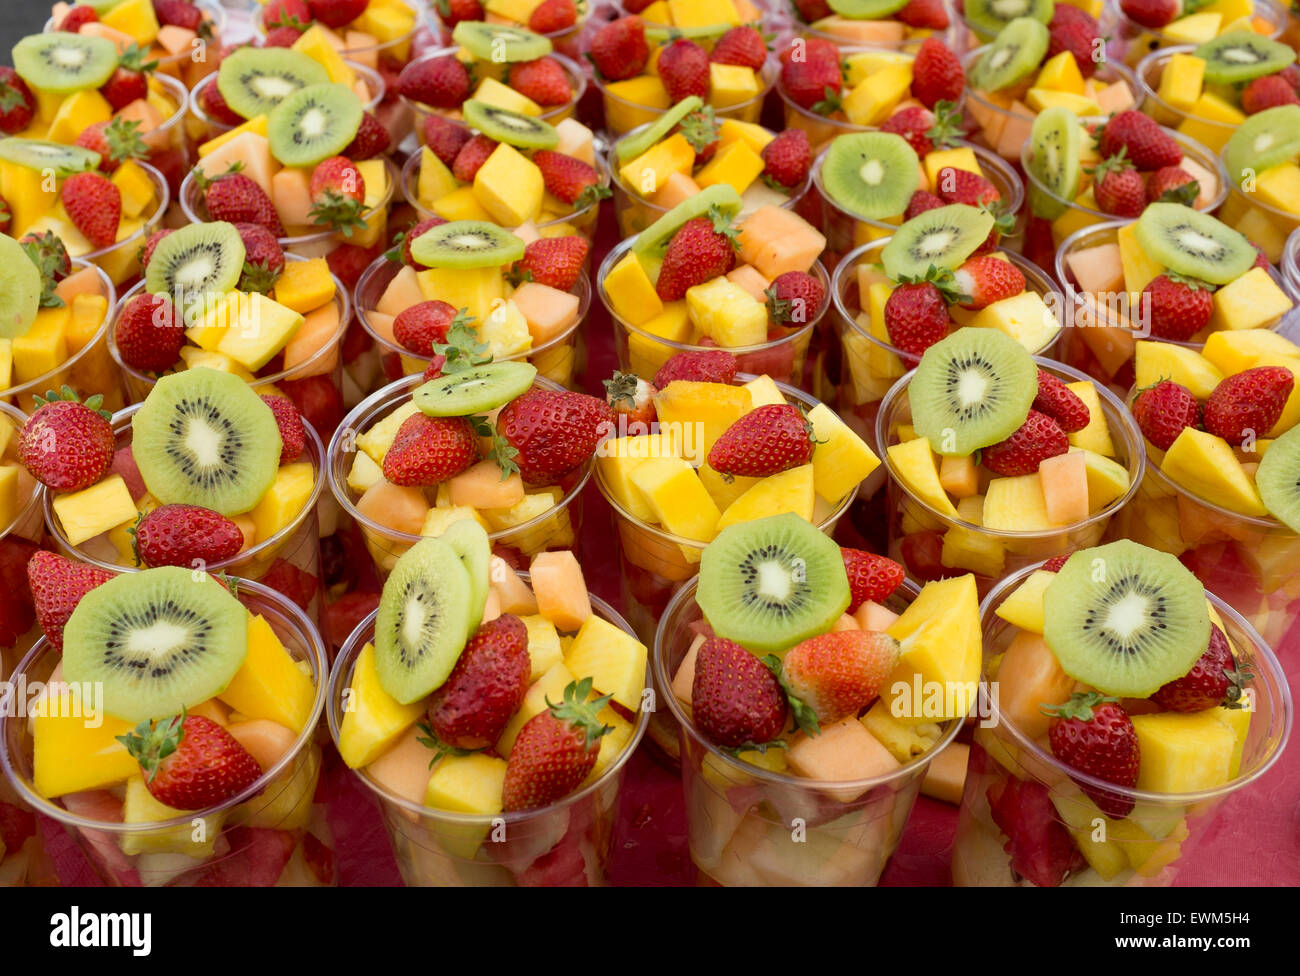 Cócteles de frutas fotografías e imágenes de alta resolución - Alamy